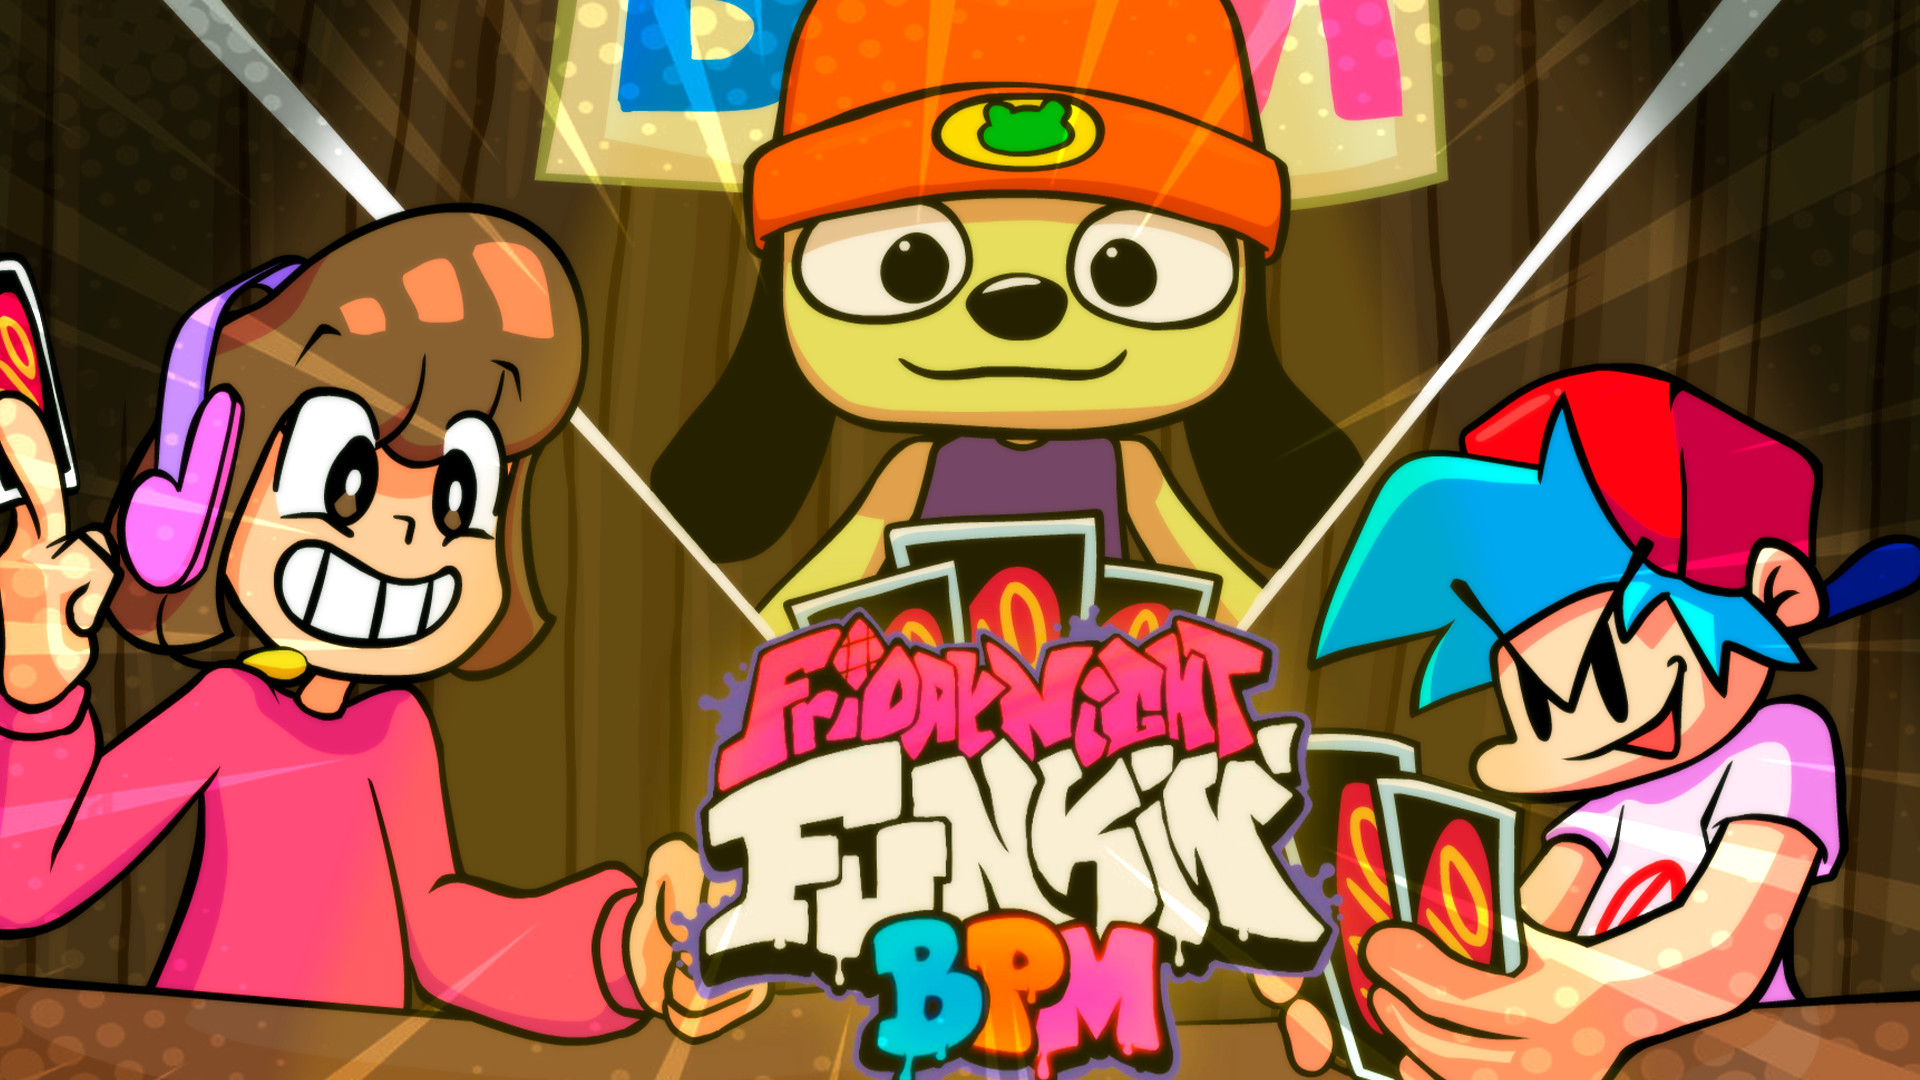 Friday Night Funkin' ONLINE VS., Funkipedia Mods Wiki